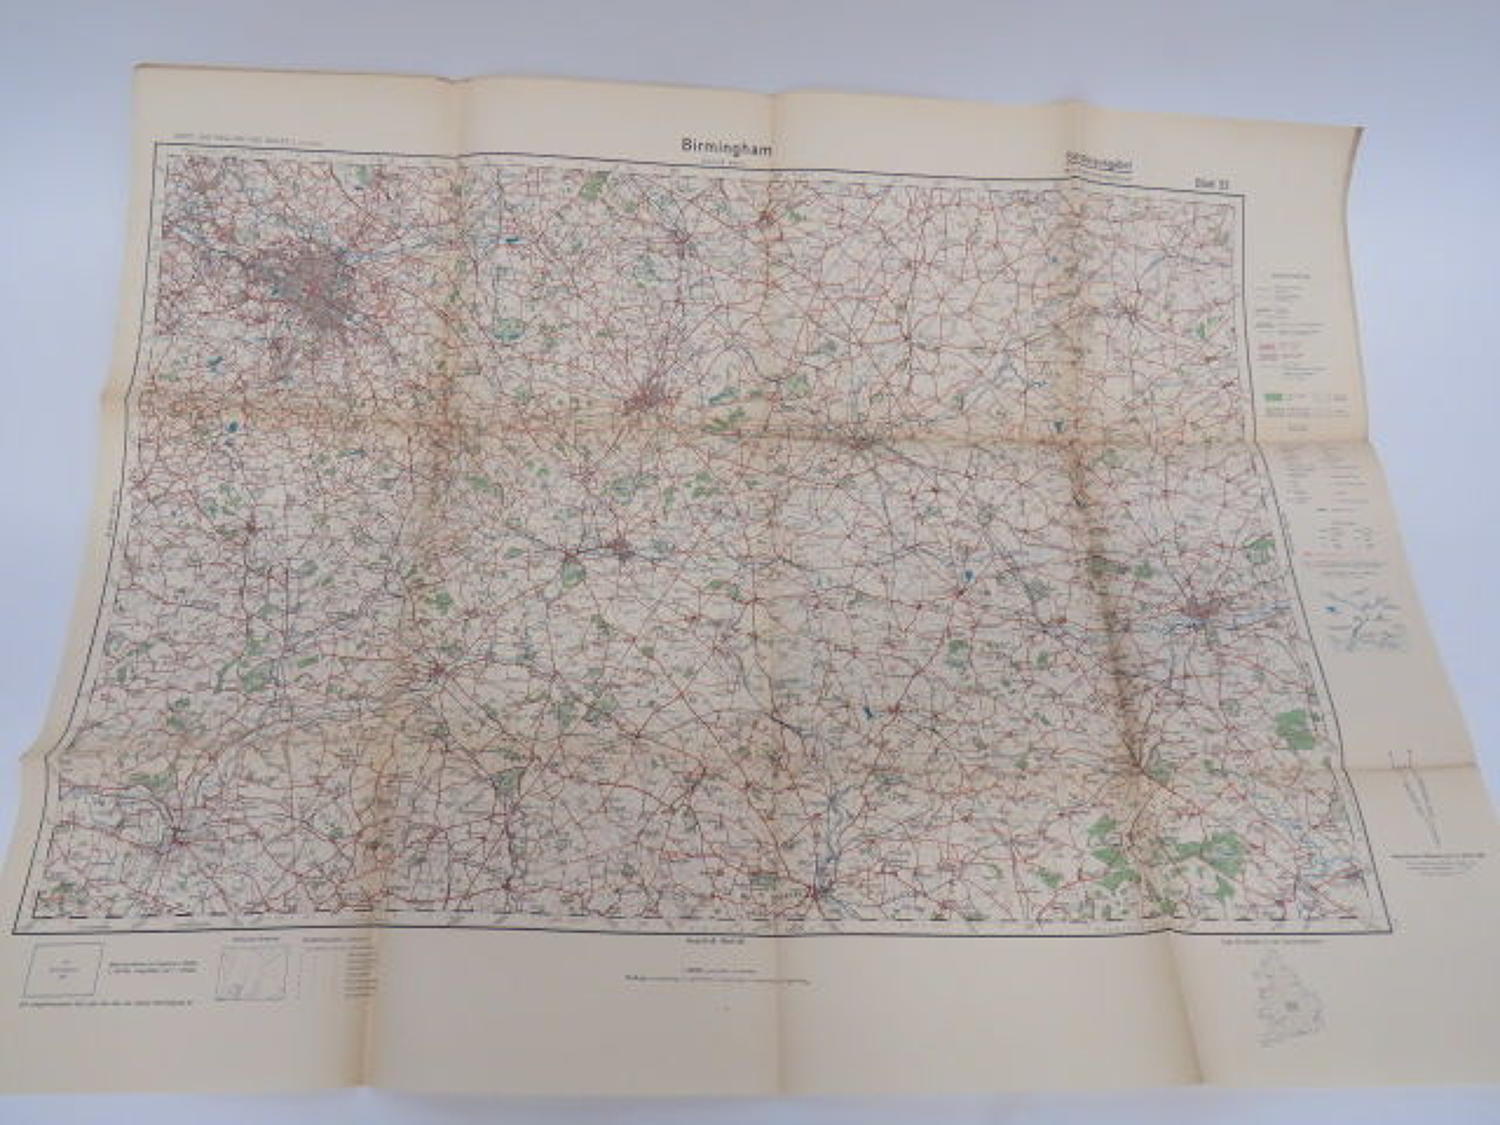 WW 2 German Invasion Map of Birmingham